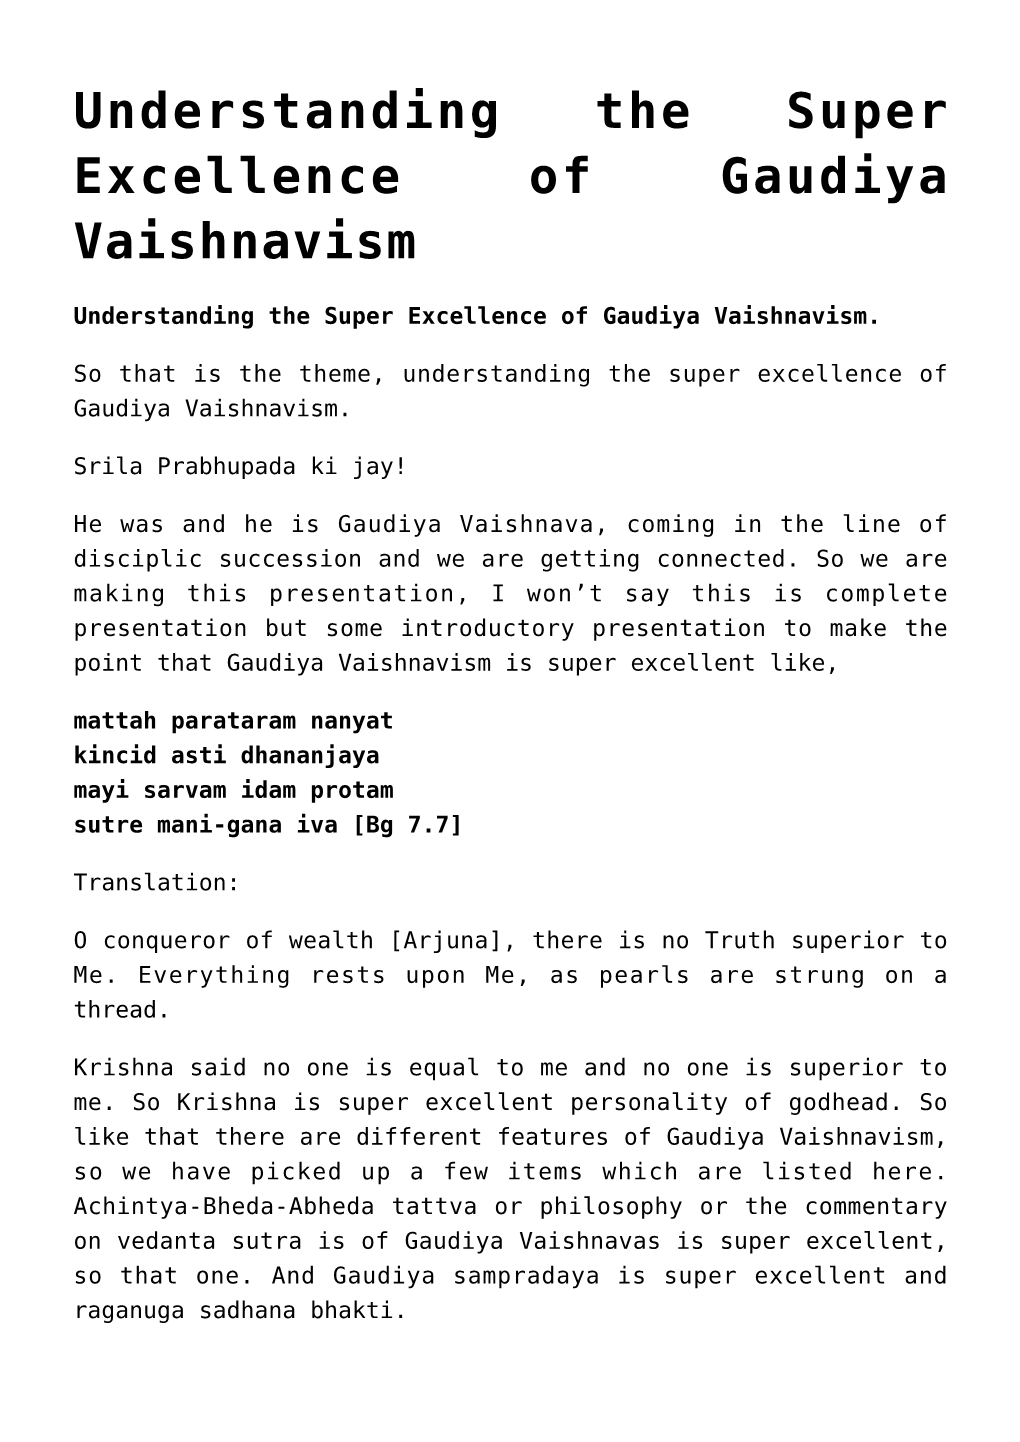 Understanding the Super Excellence of Gaudiya Vaishnavism